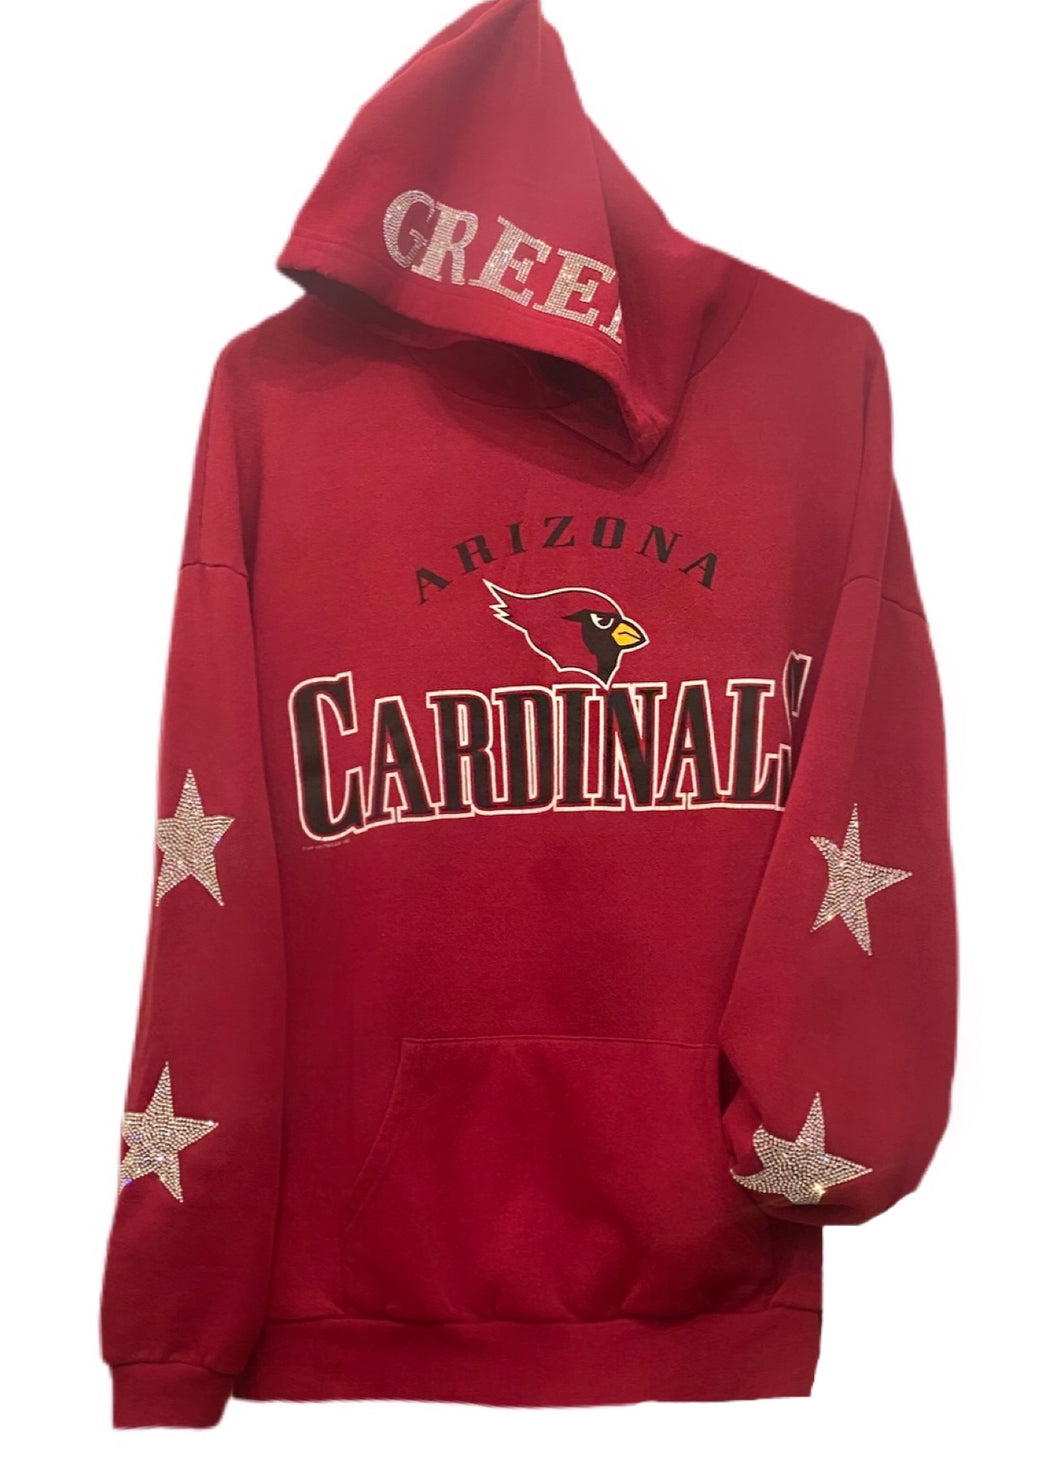 Arizona Cardinals, NFL One of a KIND Vintage Sweatshirt with Crystal Star Design